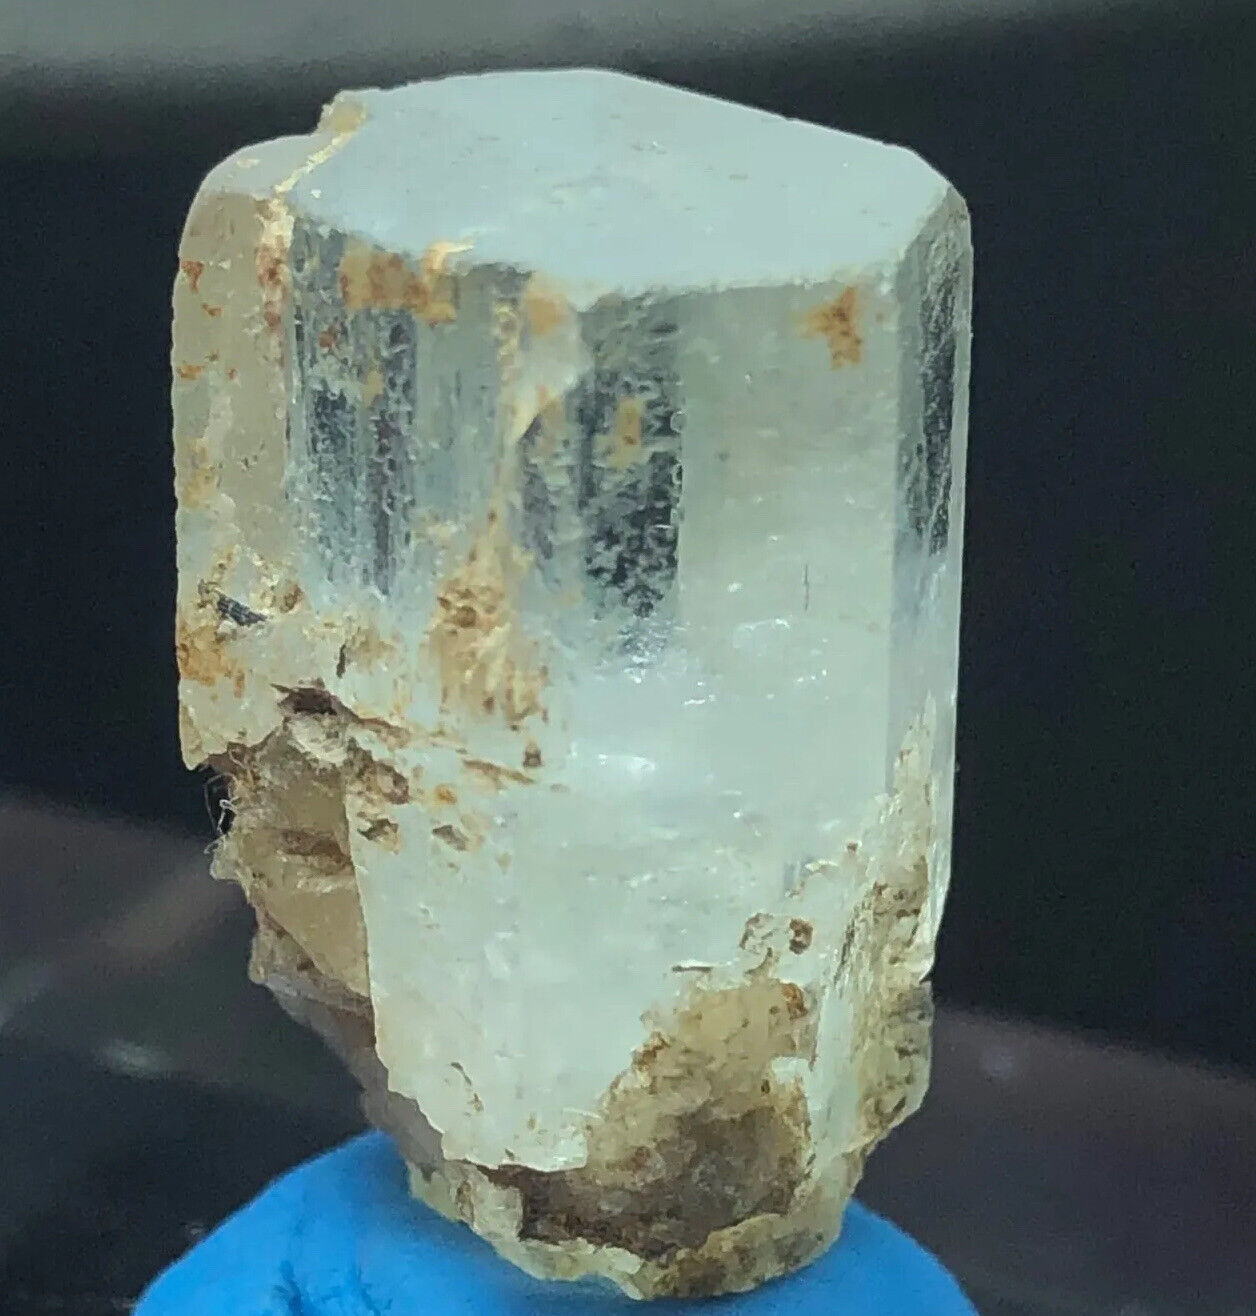 AquaMorganite Crystal - Morganite Var Aquamarine Mineral Specimen - 28 CT